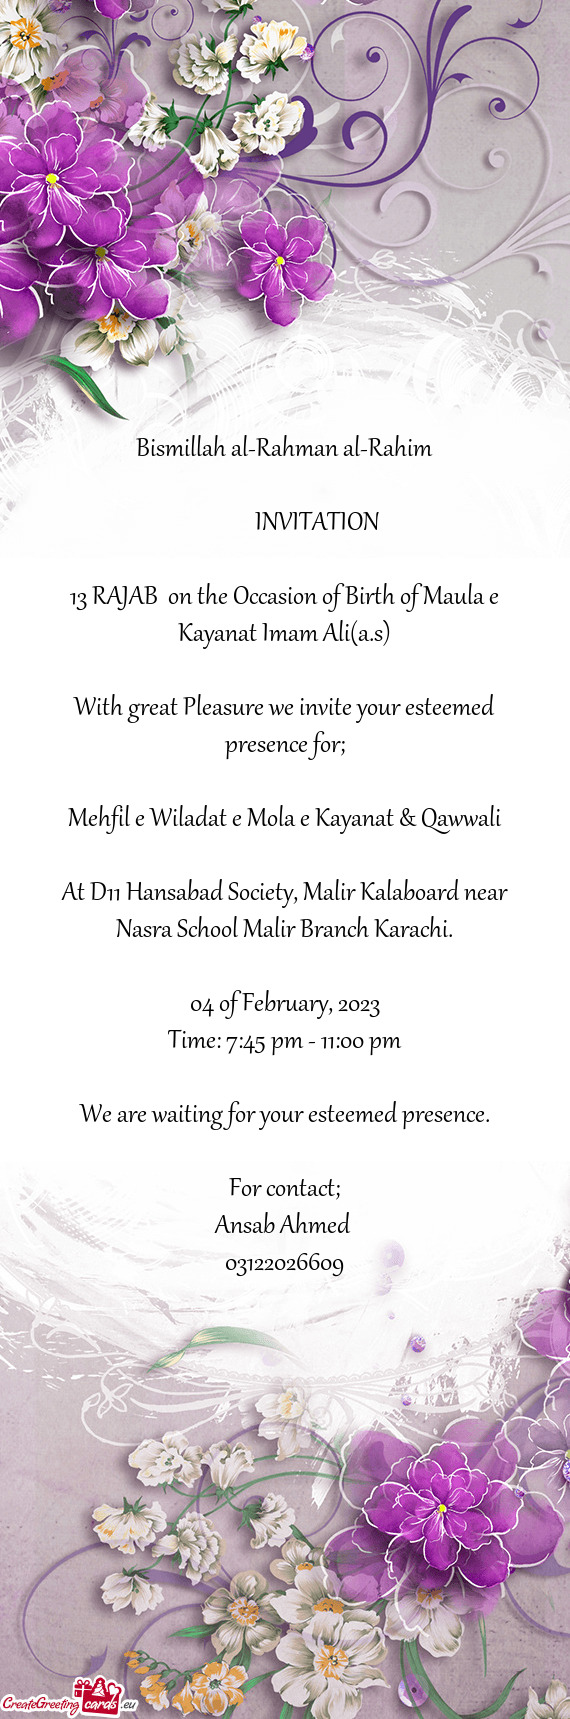 13 RAJAB on the Occasion of Birth of Maula e Kayanat Imam Ali(a.s)